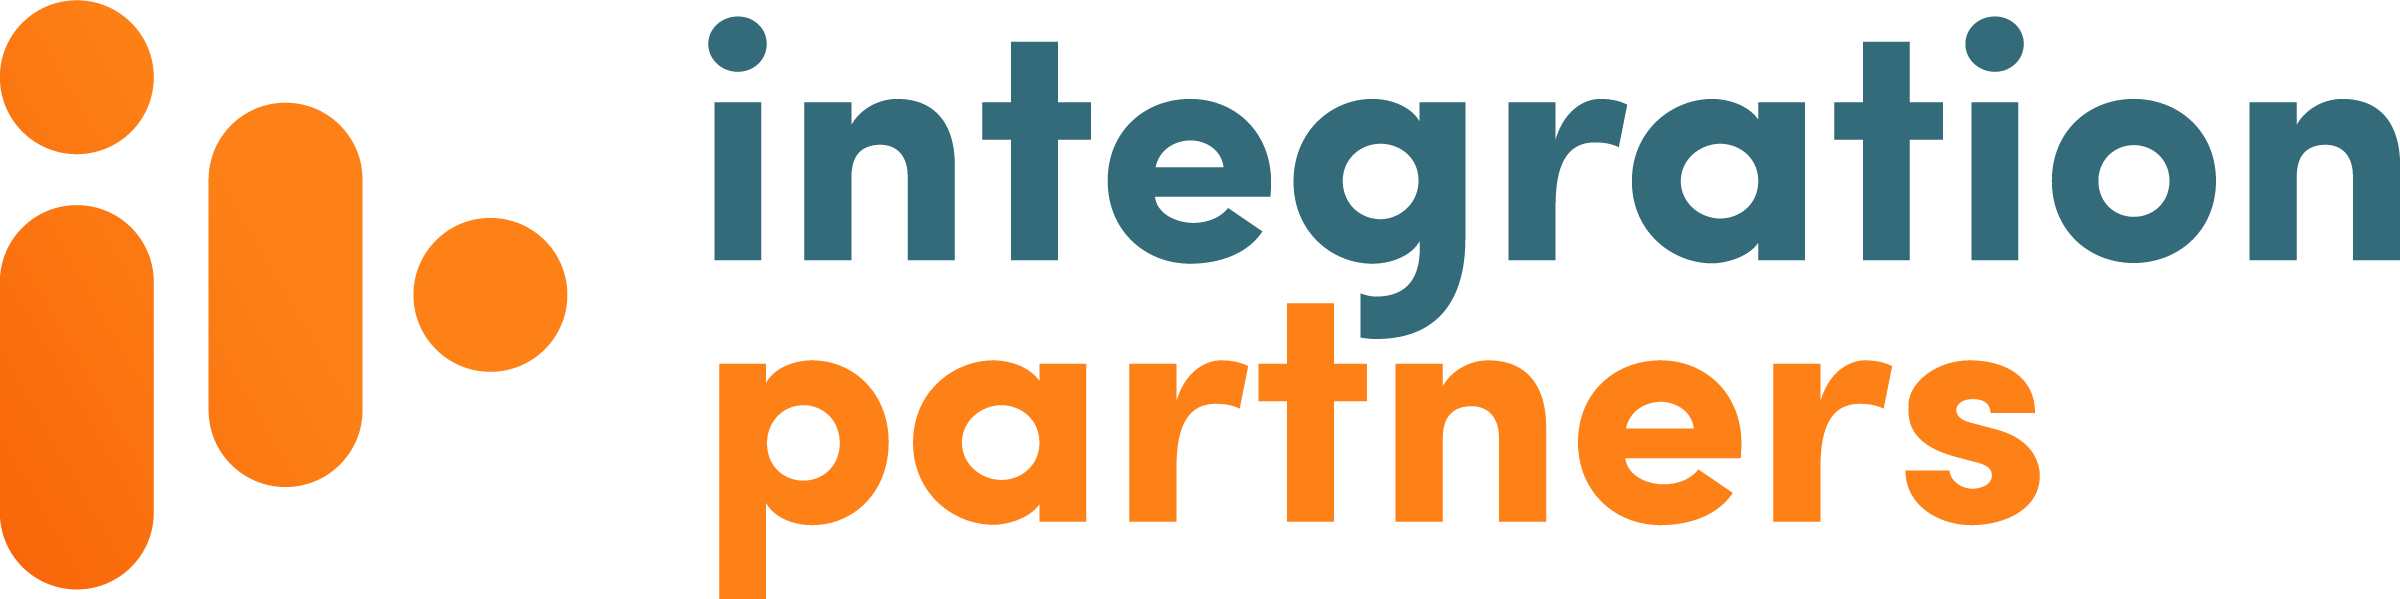 Integration Partners Corporation logo